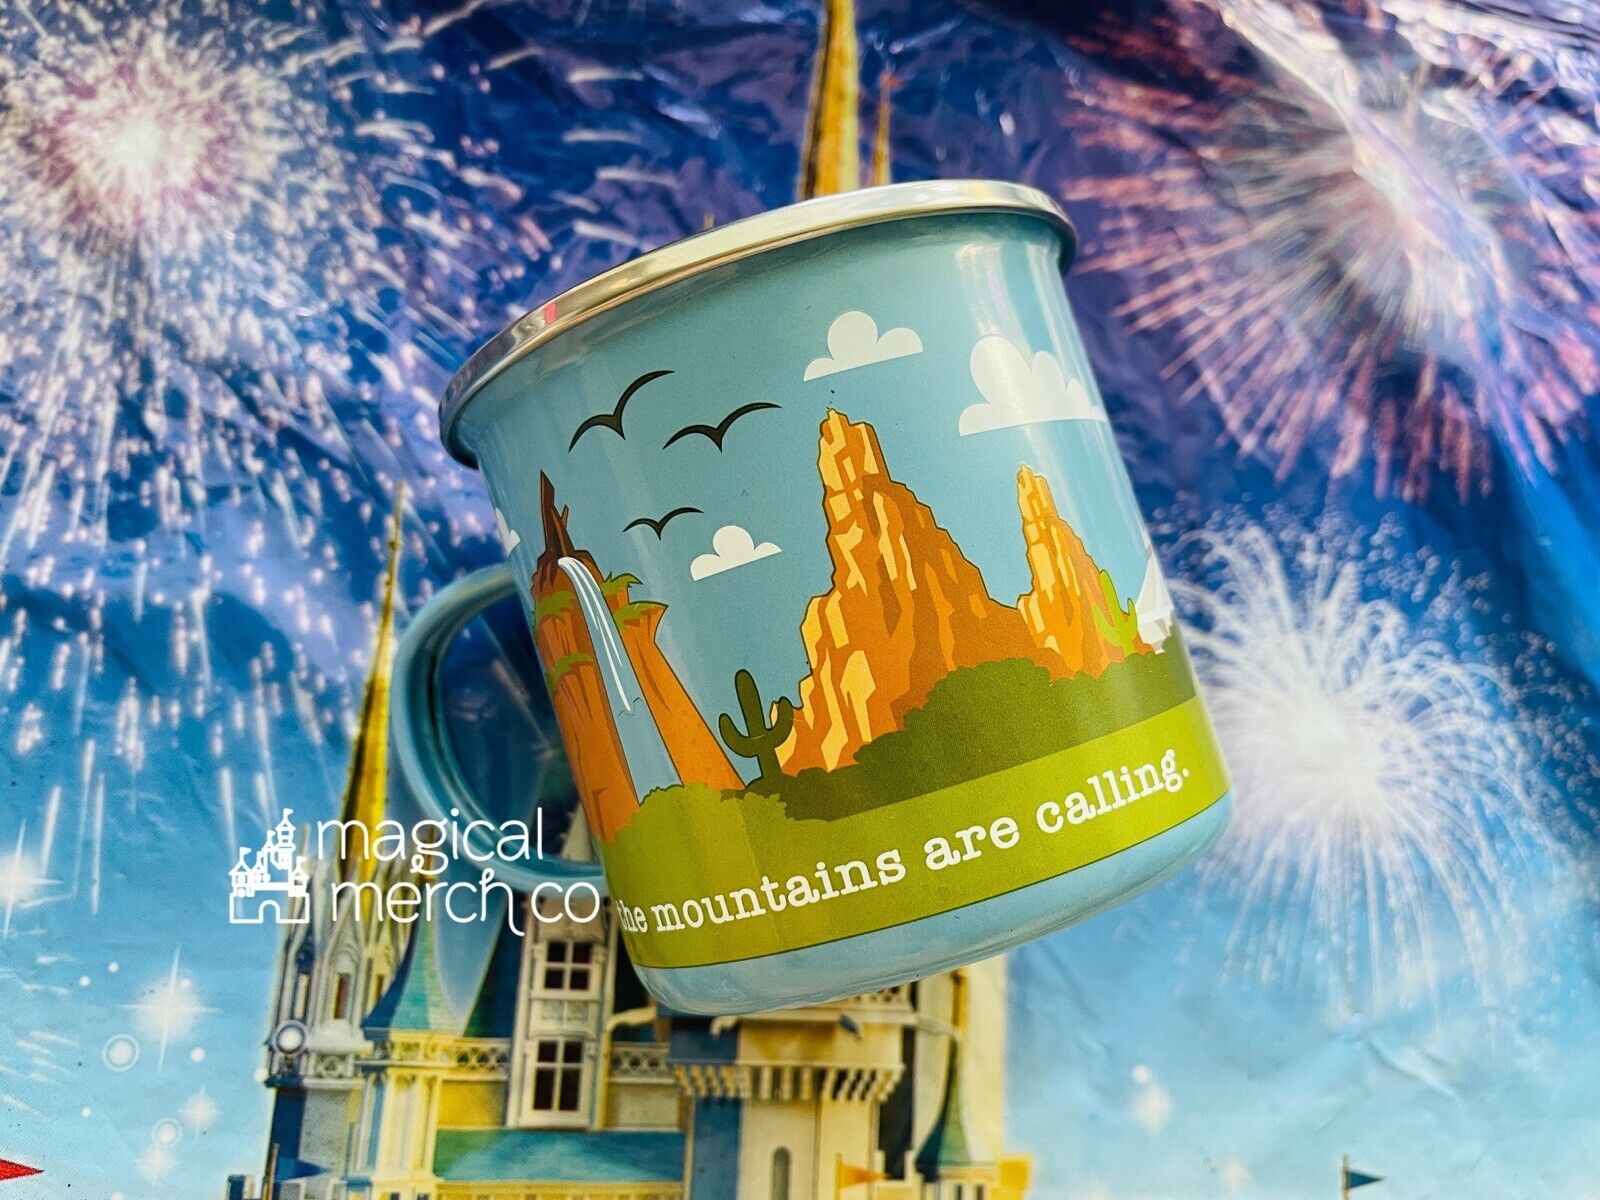 2022 Walt Disney World The Mountains are Calling Mug Cup Space Splash Mountain